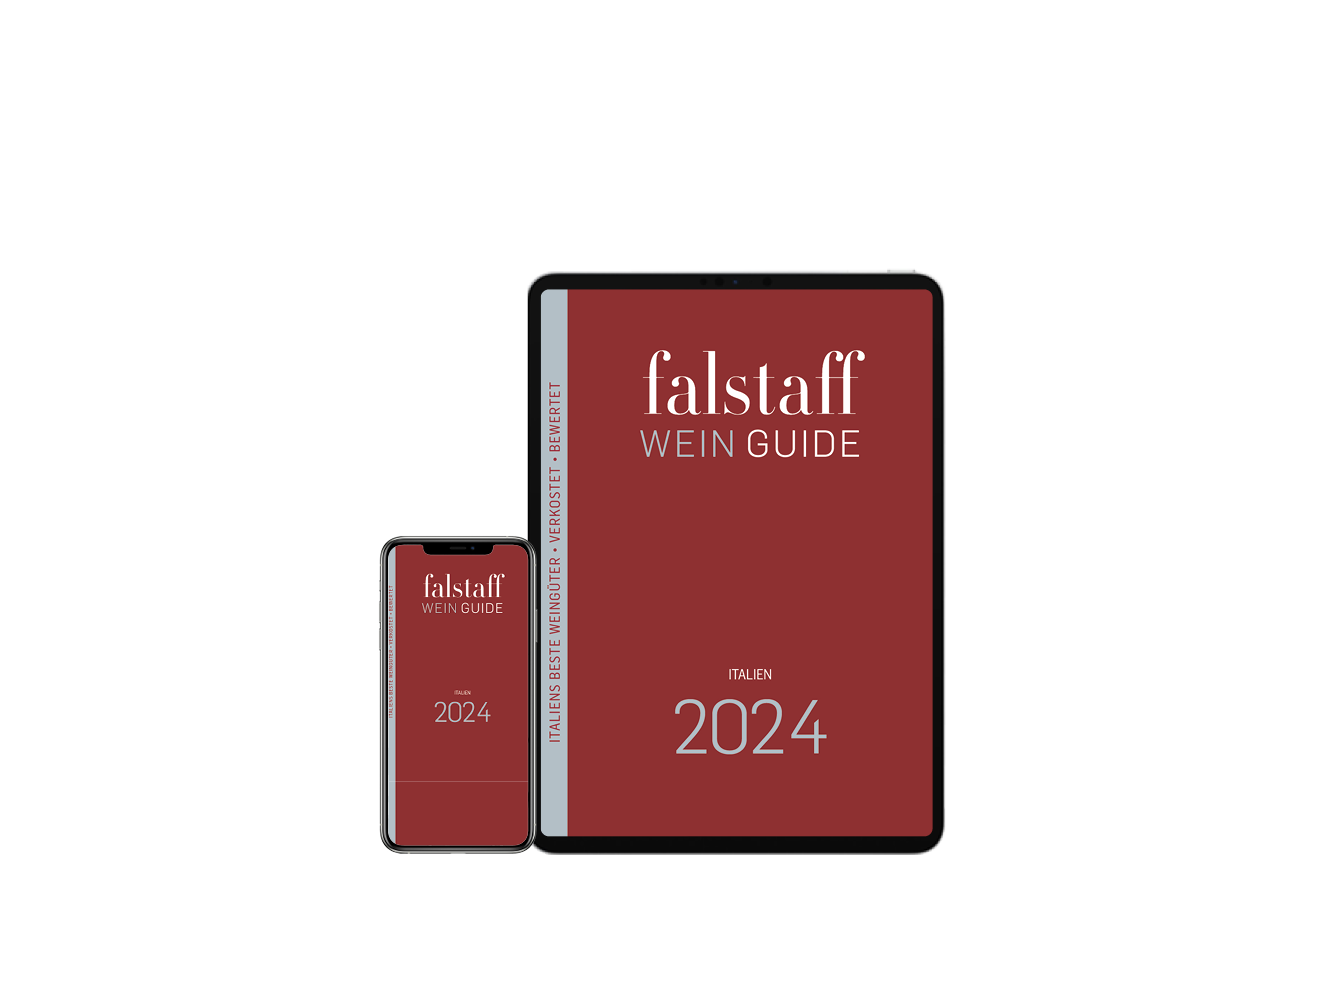 Wein Guide Italien 2024 Falstaff Shop Schweiz